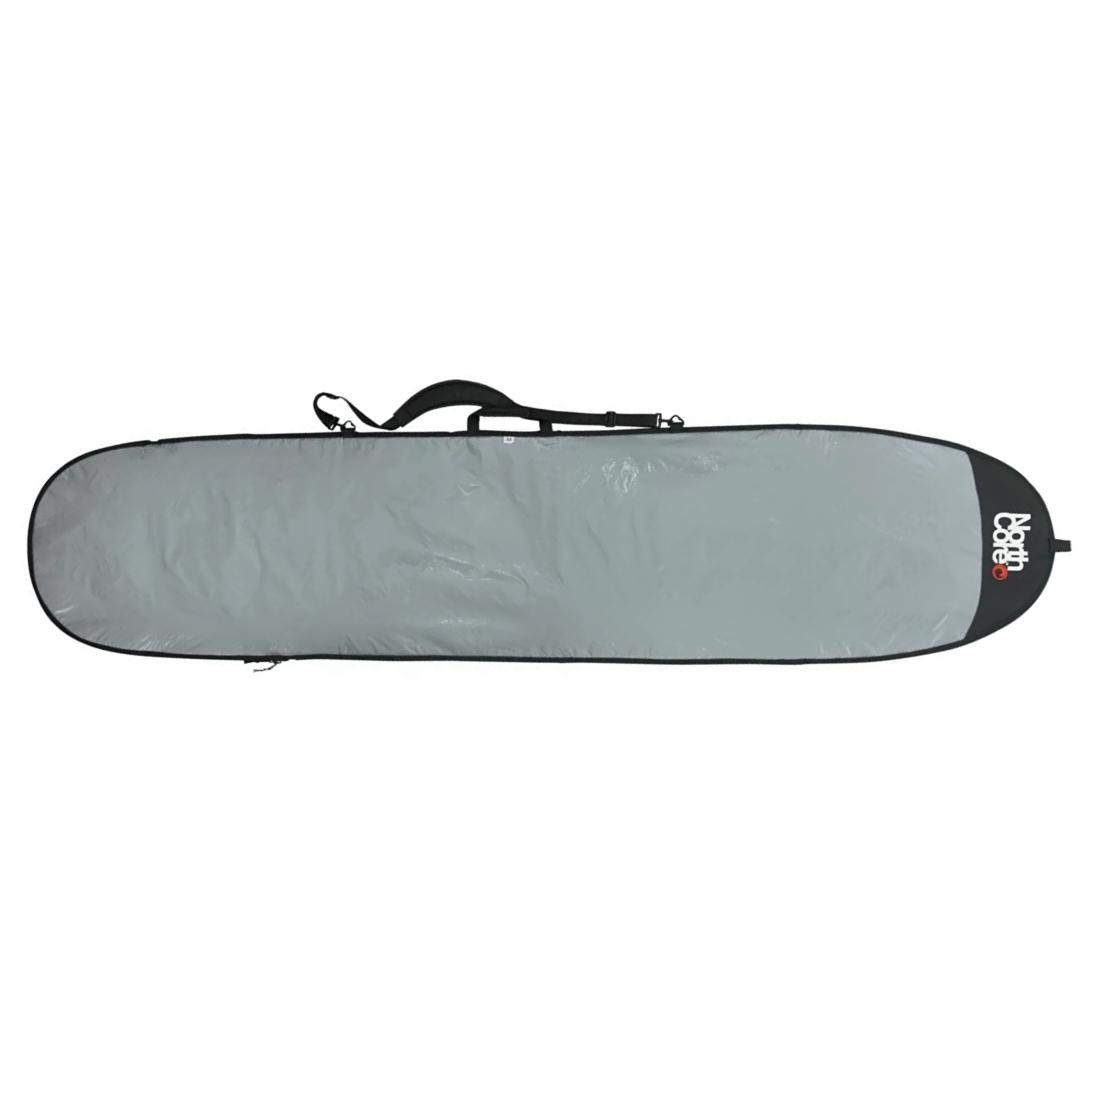 Northcore 8'0 New Addiction Mini-Mal Surfboard Bag - Silver - Longboard Surfboard Bag/Cover by Northcore 8ft 0